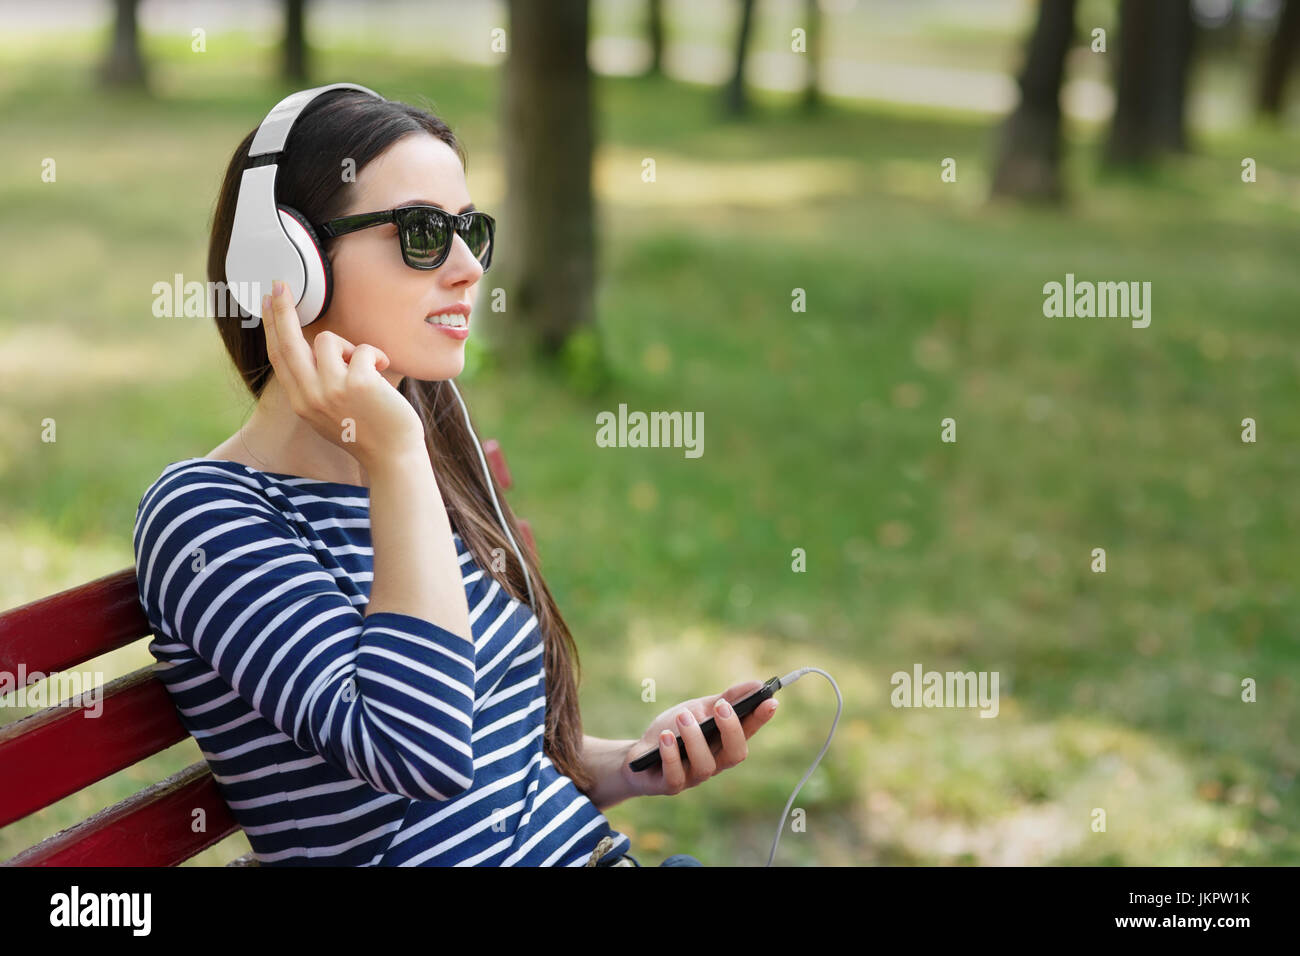 woman in headphones outdoors Stock Photo